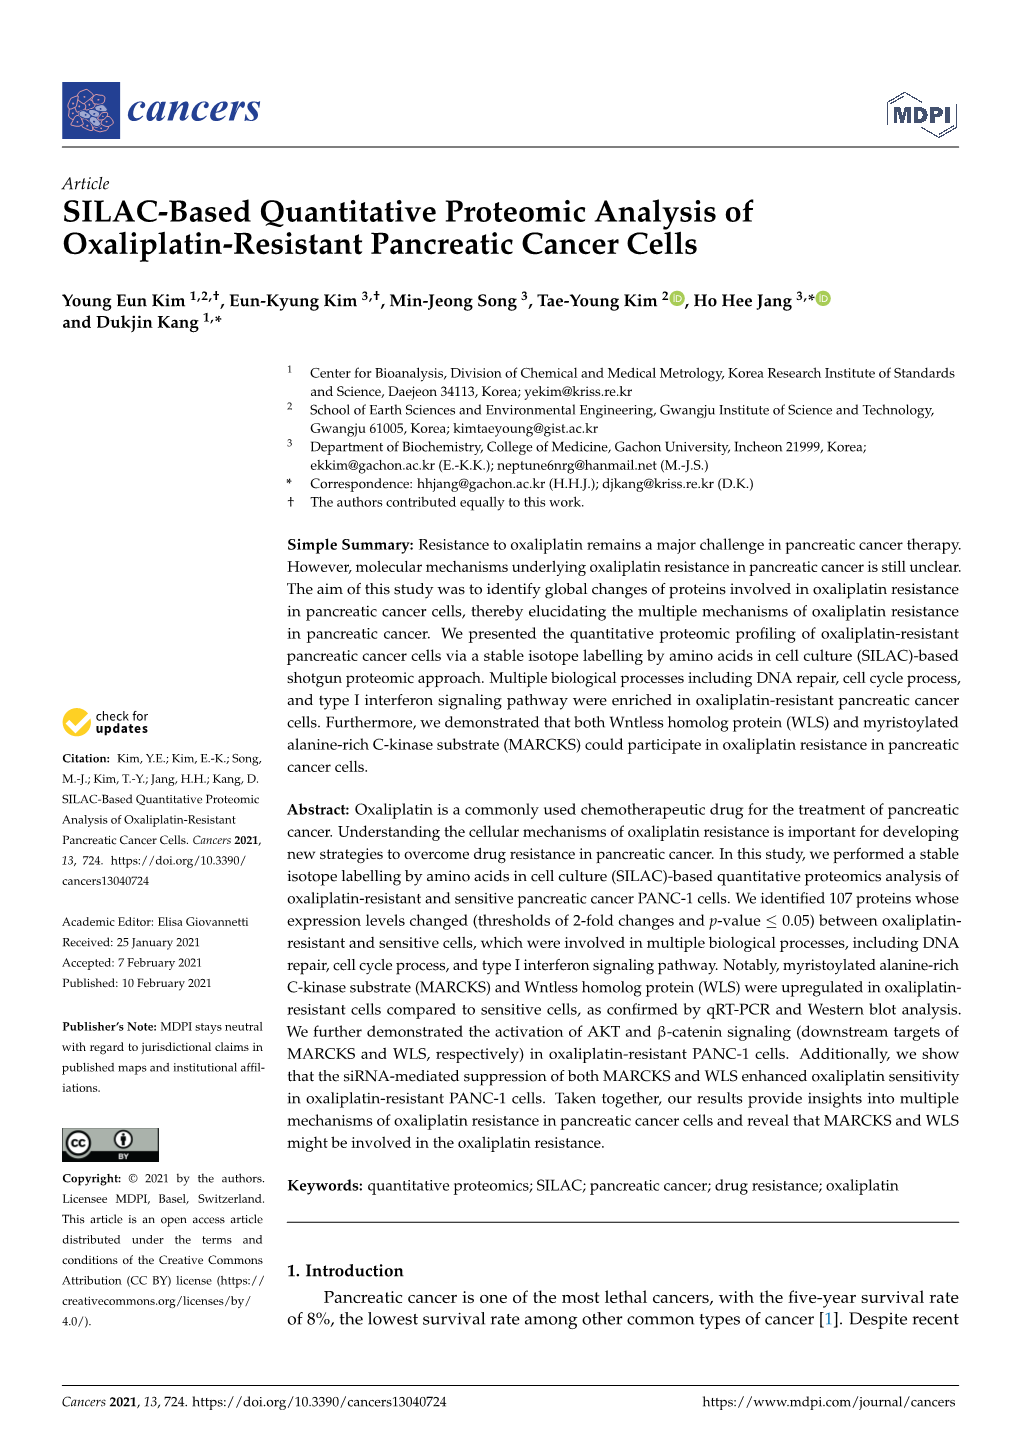 SILAC-Based Quantitative Proteomic Analysis of Oxaliplatin-Resistant Pancreatic Cancer Cells